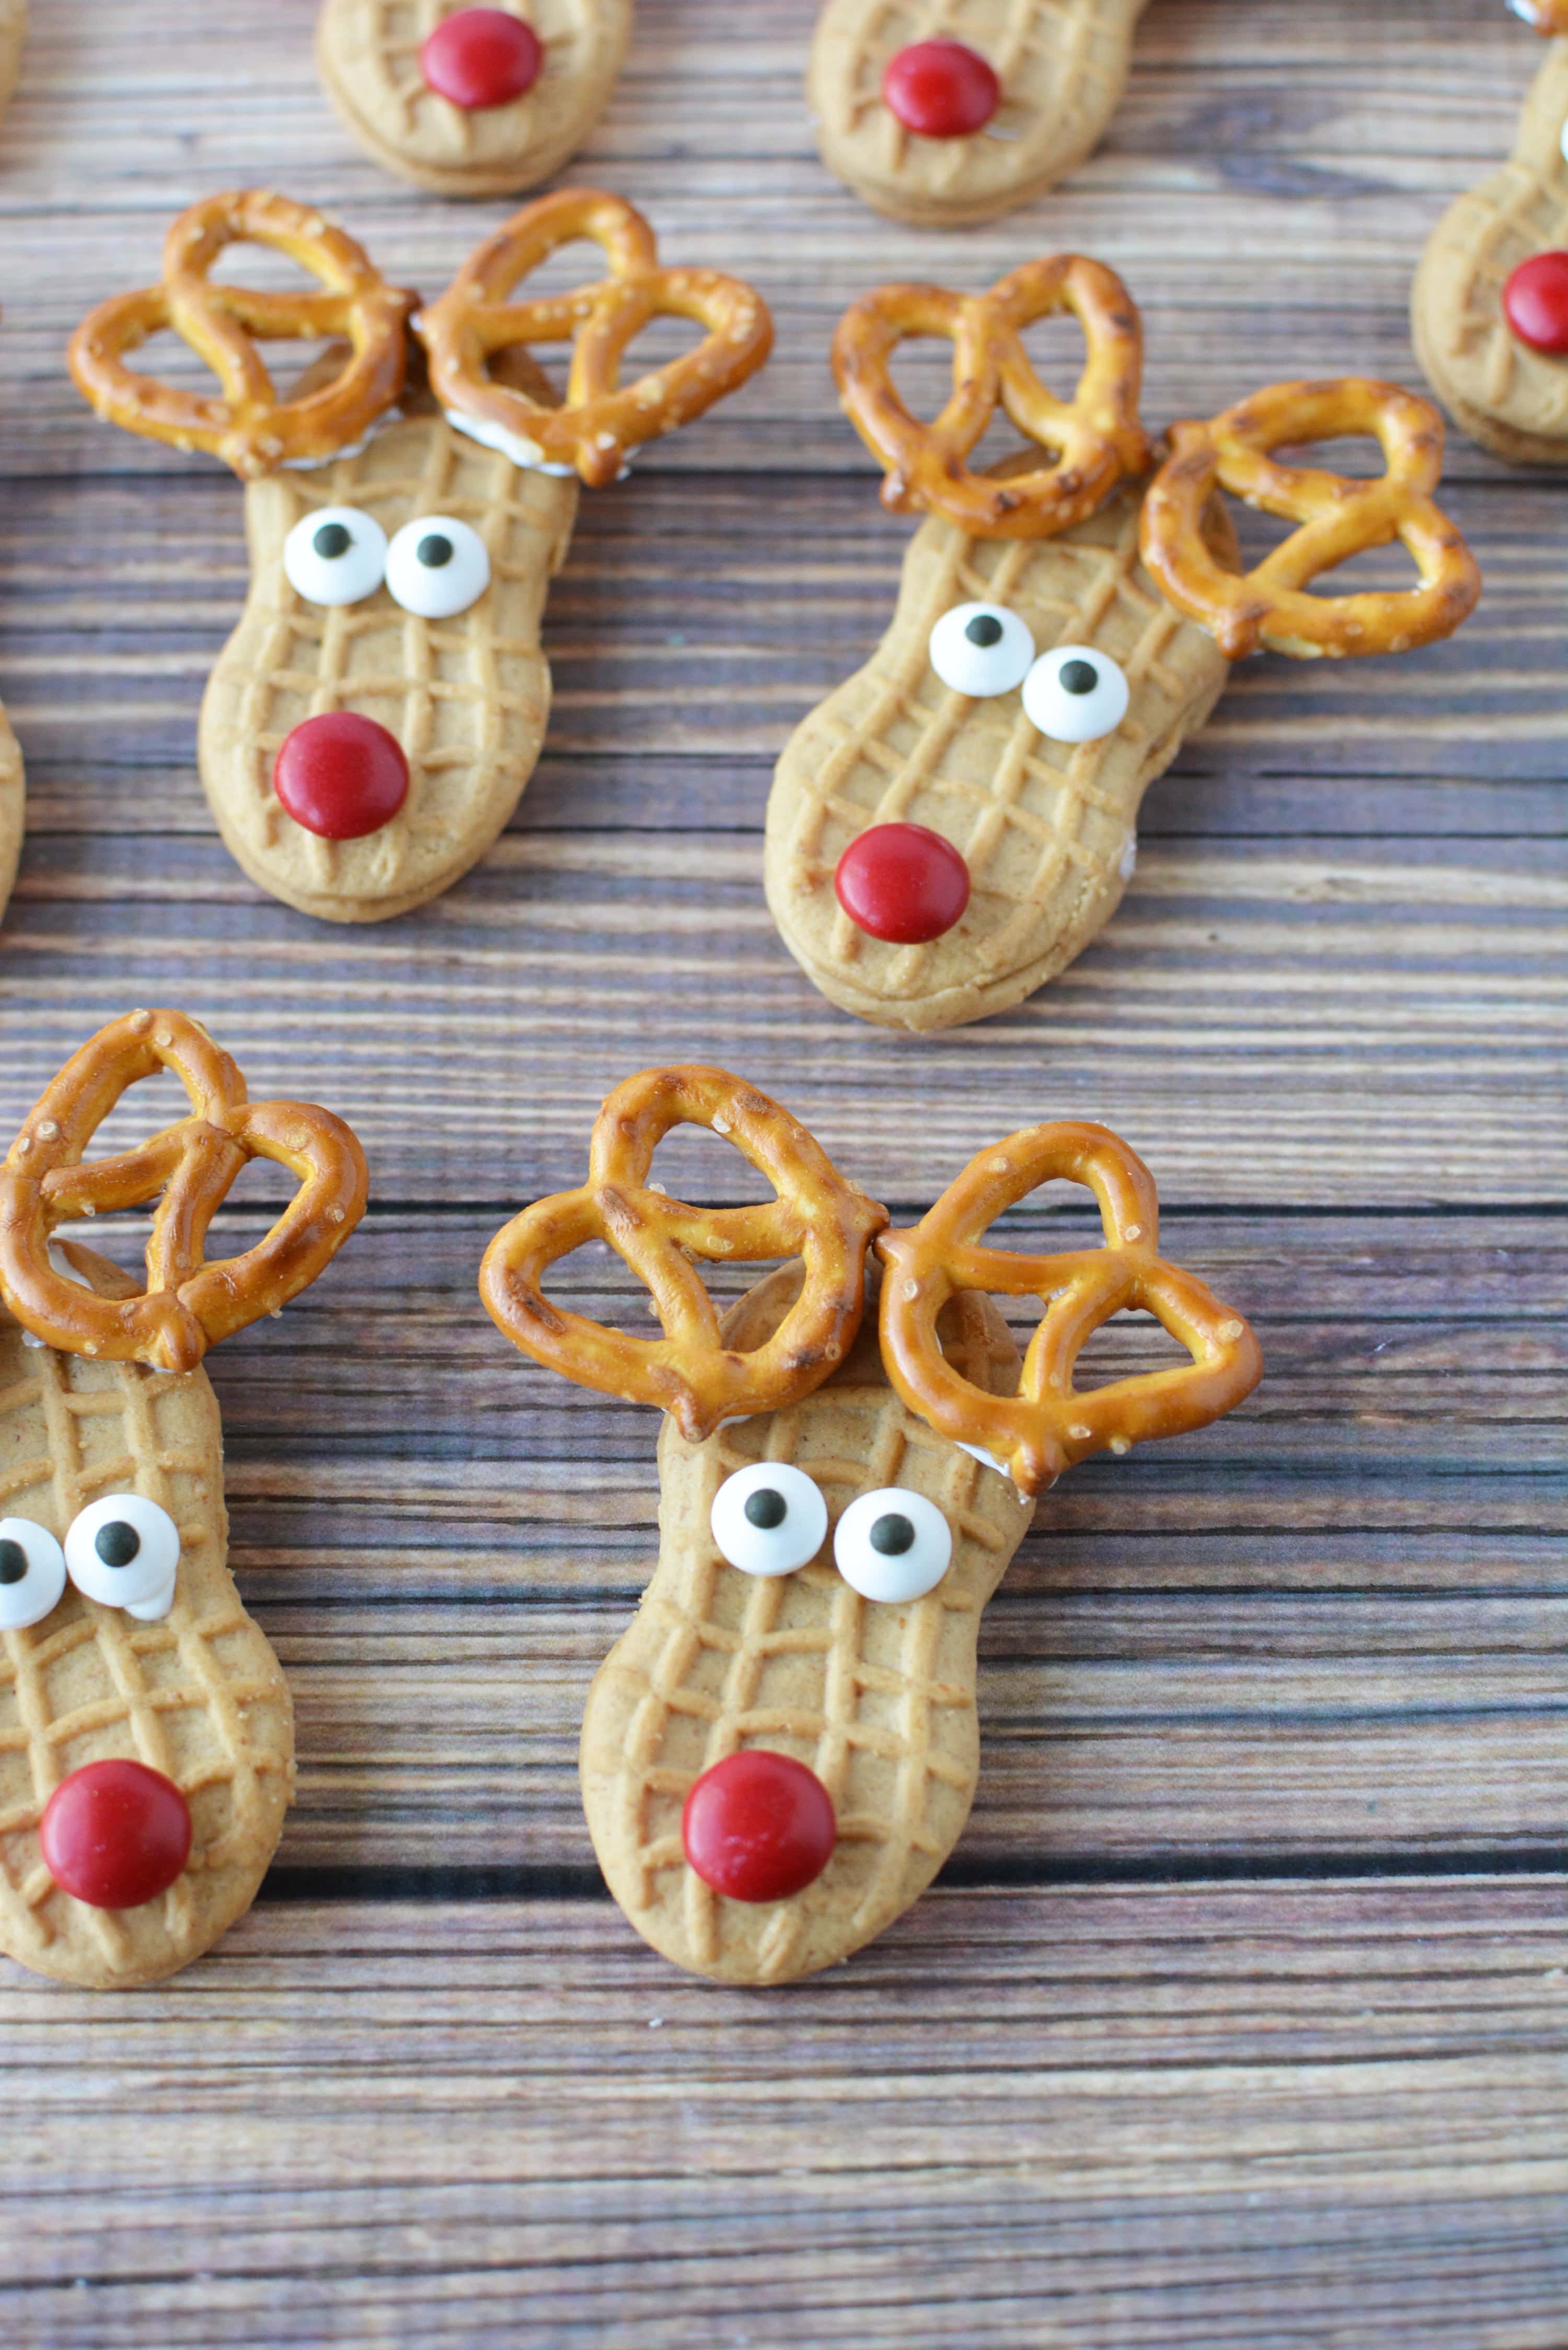 Christmas Cookie Recipes: No Bake Reindeer Cookies - So CUTE! - Thrifty